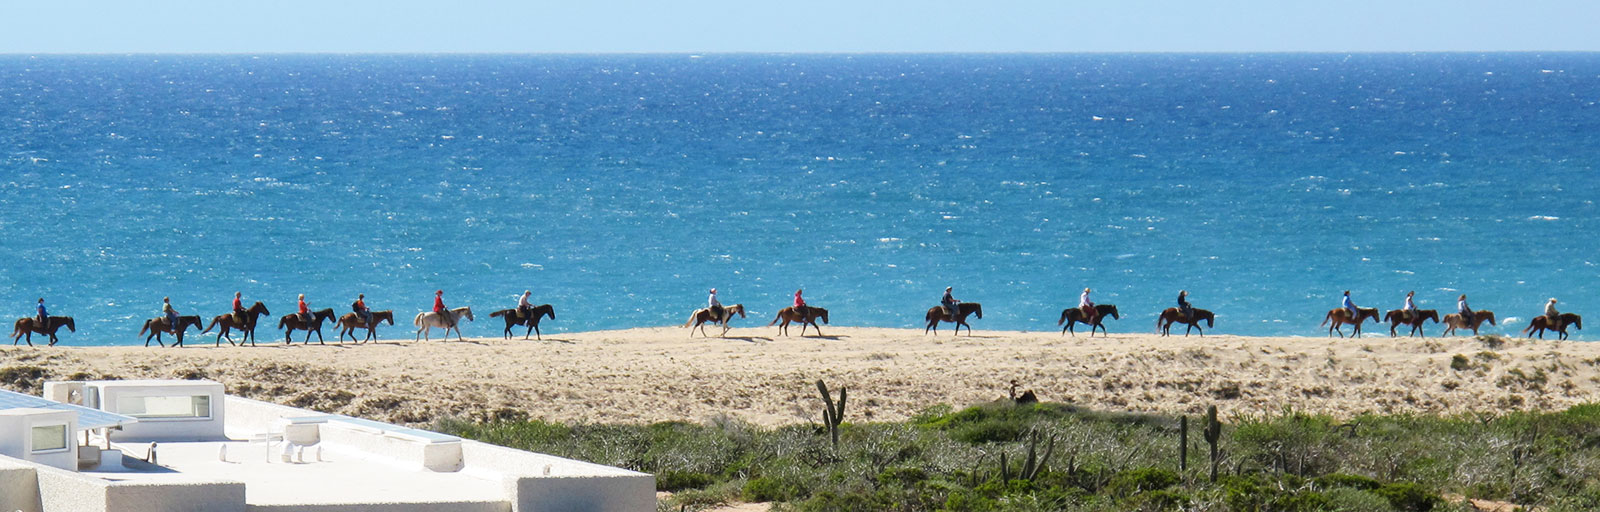 Horseback Riding & Yoga Retreat in Mexico: Beach Ride with Ocean View